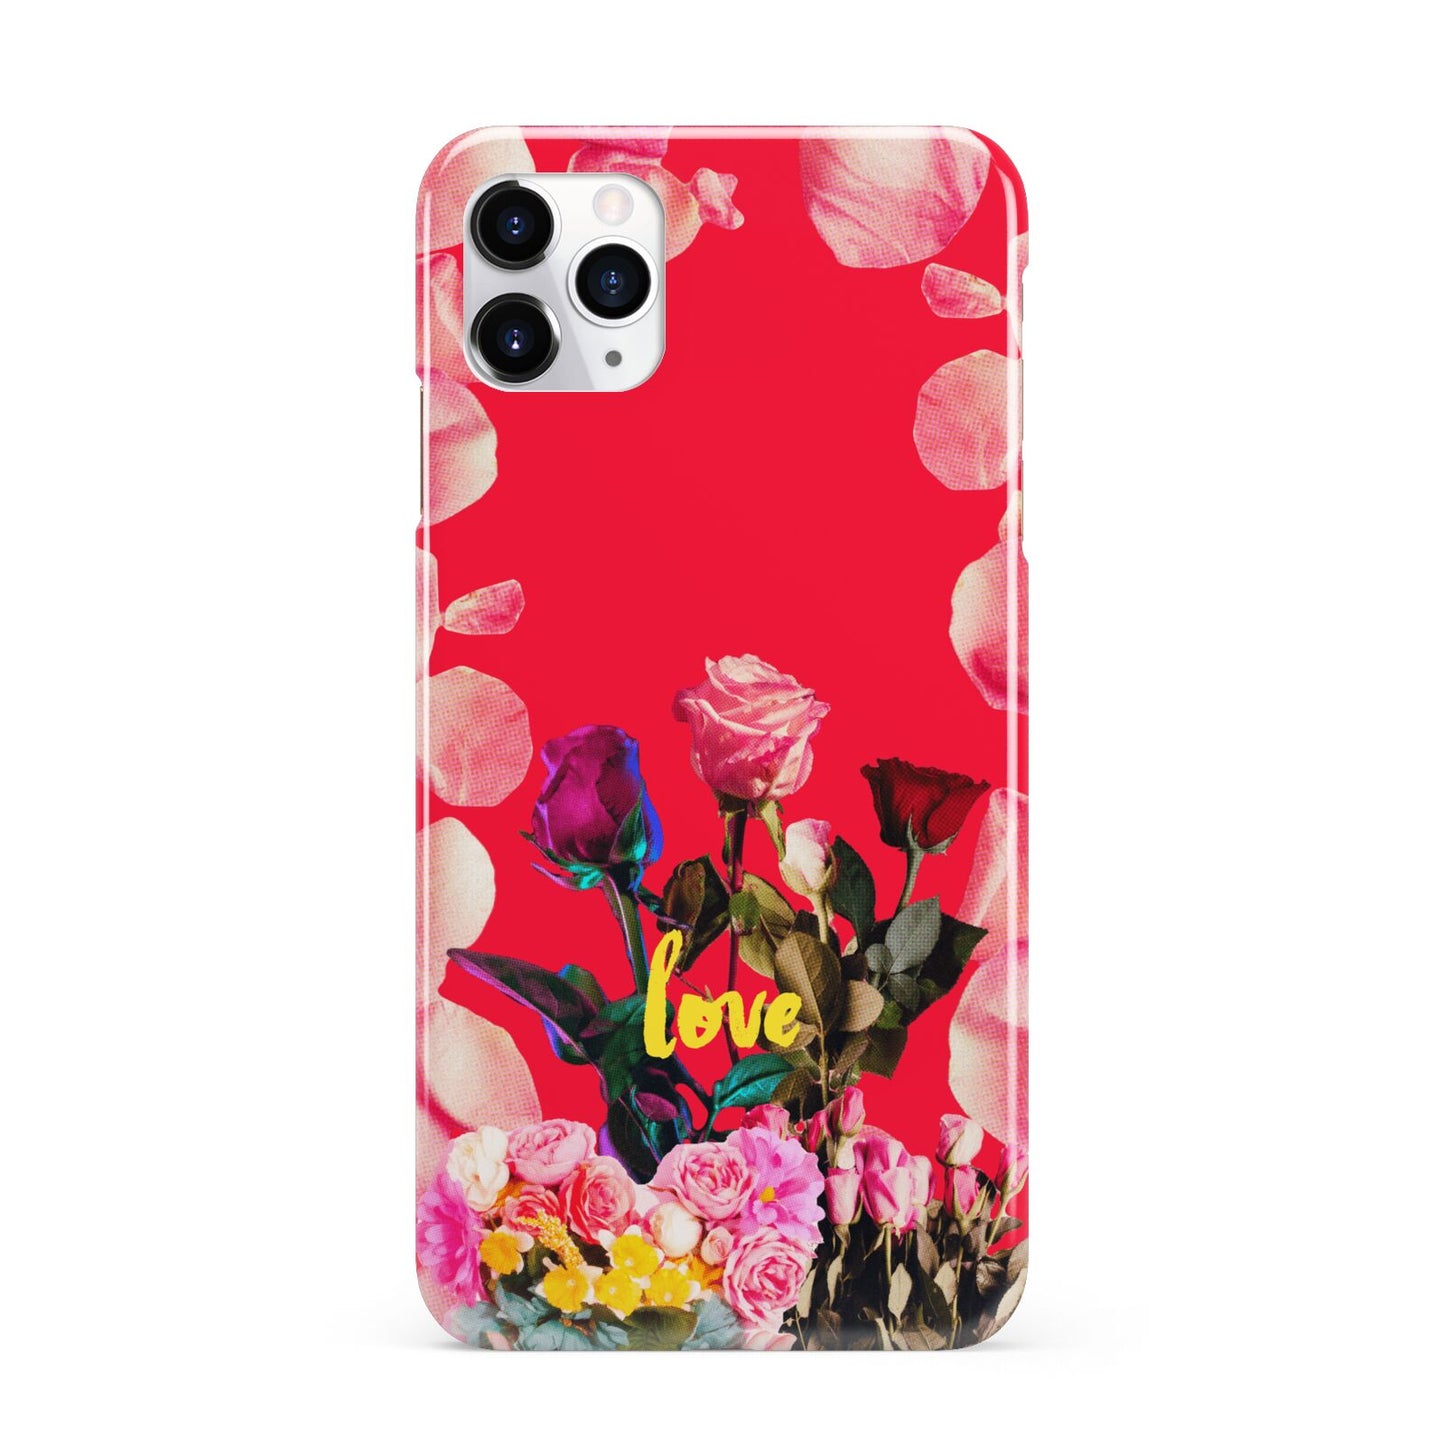 Retro Floral Valentine iPhone 11 Pro Max 3D Snap Case